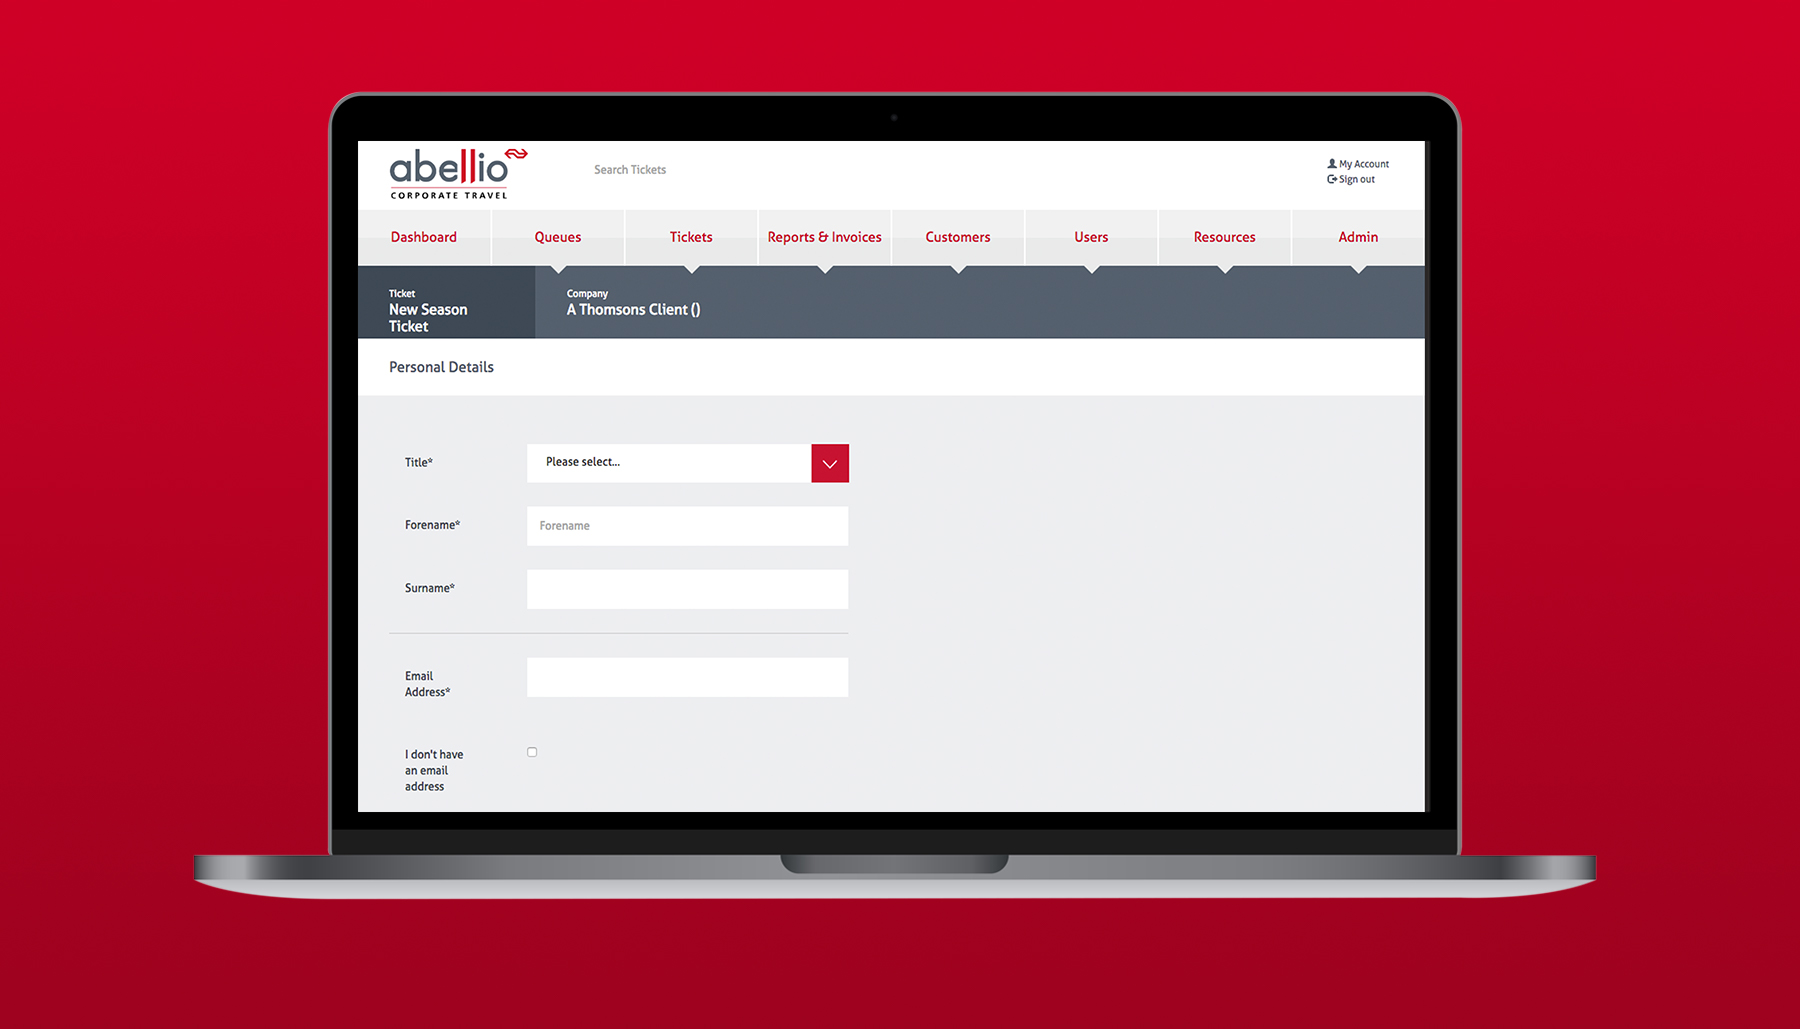 Abellio Corporate Travel Portal